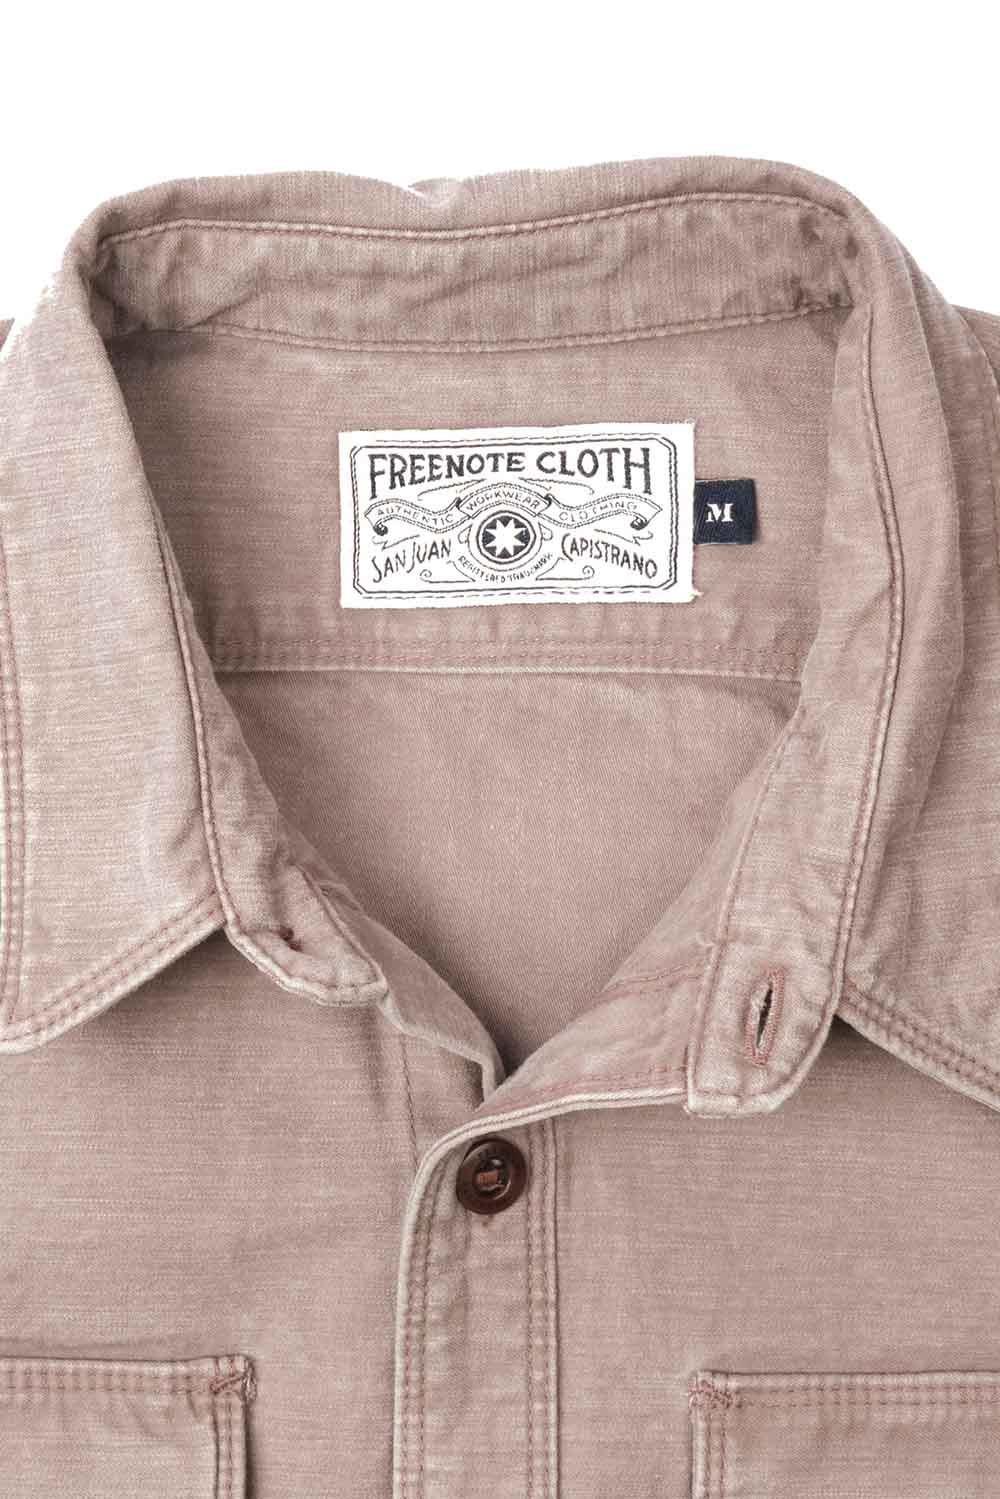 Freenote Cloth - Utility - Light Grey - Collar